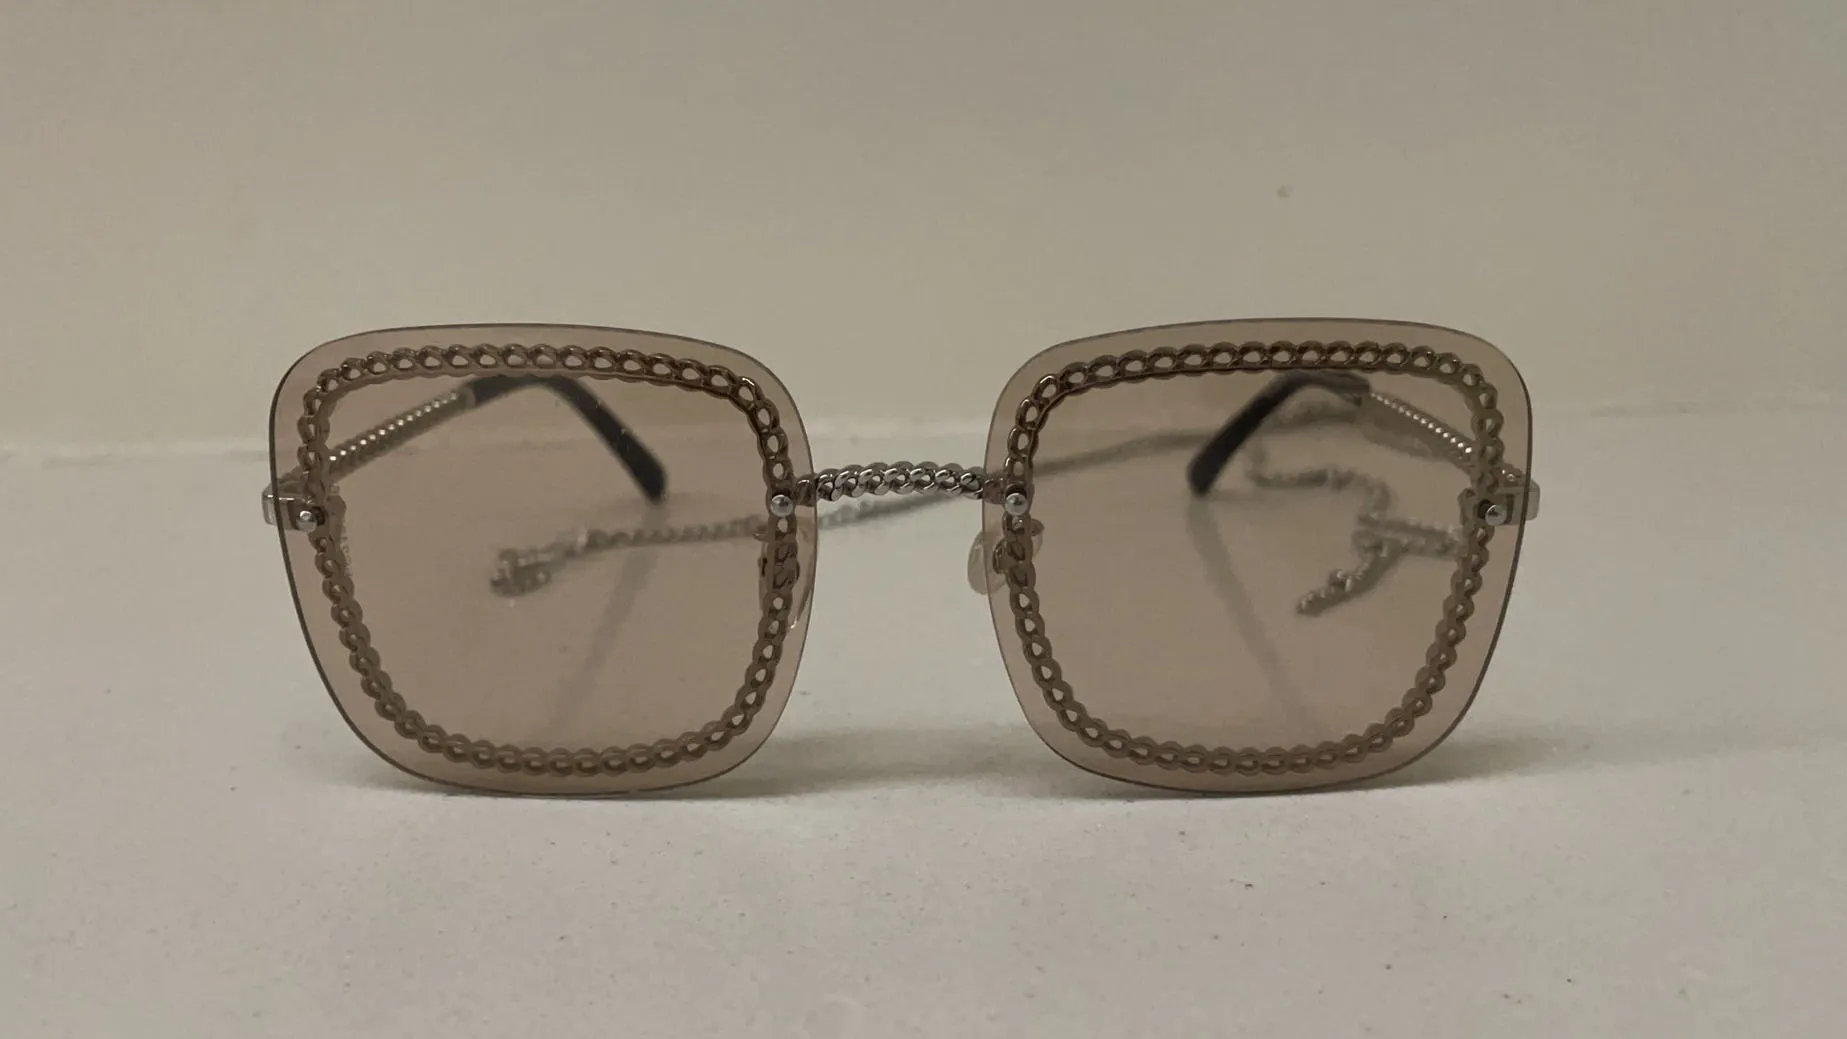 top kwaliteit dames zonnebril mannen zonnebril vrouwen glas mode stijl beschermt ogen Gafas sol lunettes de soleil met box297M